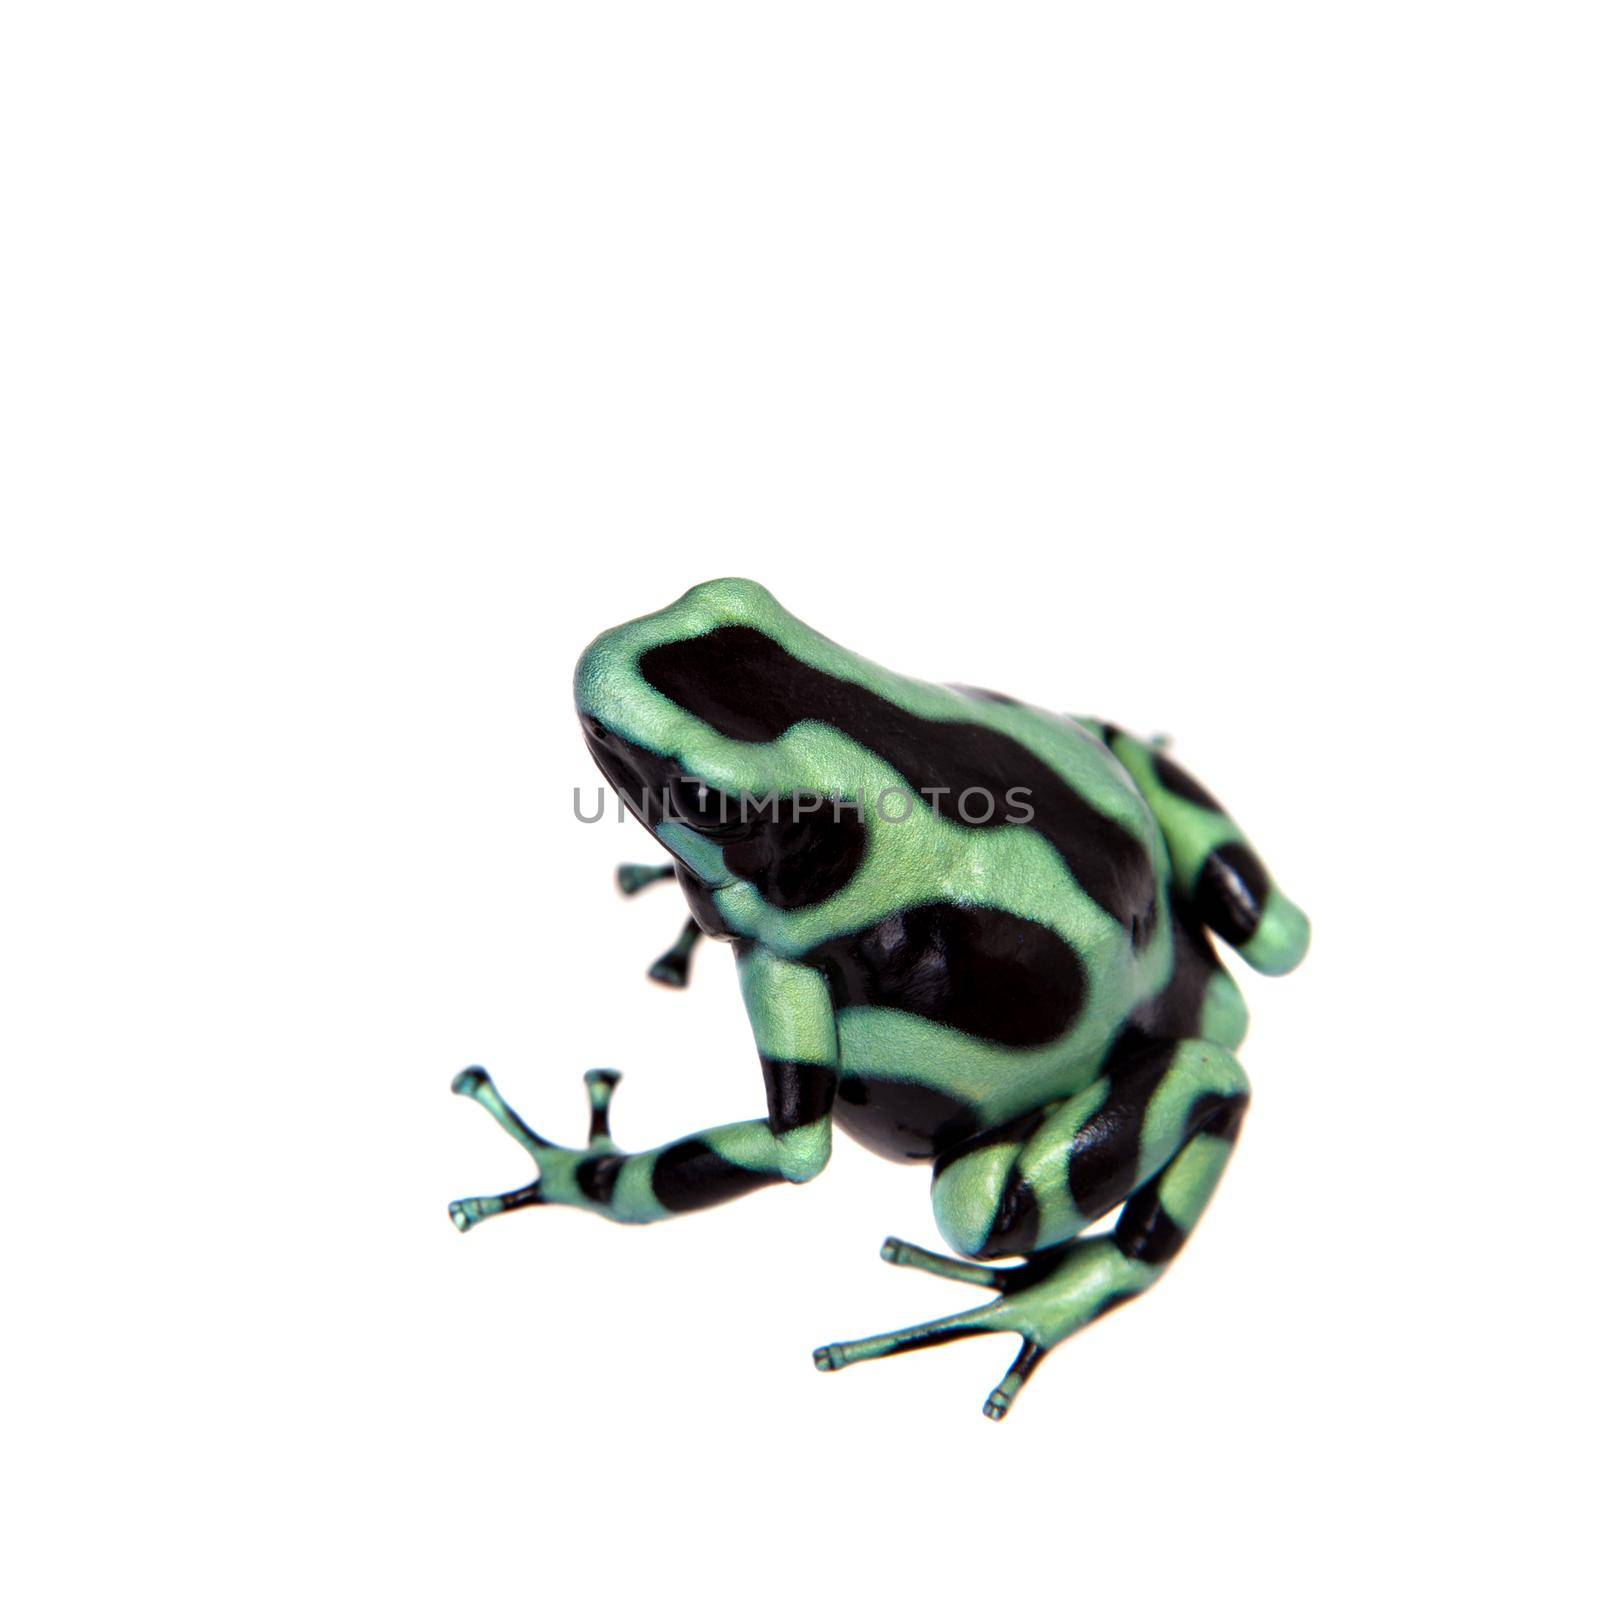 Green-and-Black Poison Dart Frog, Dendrobates auratus on white background.